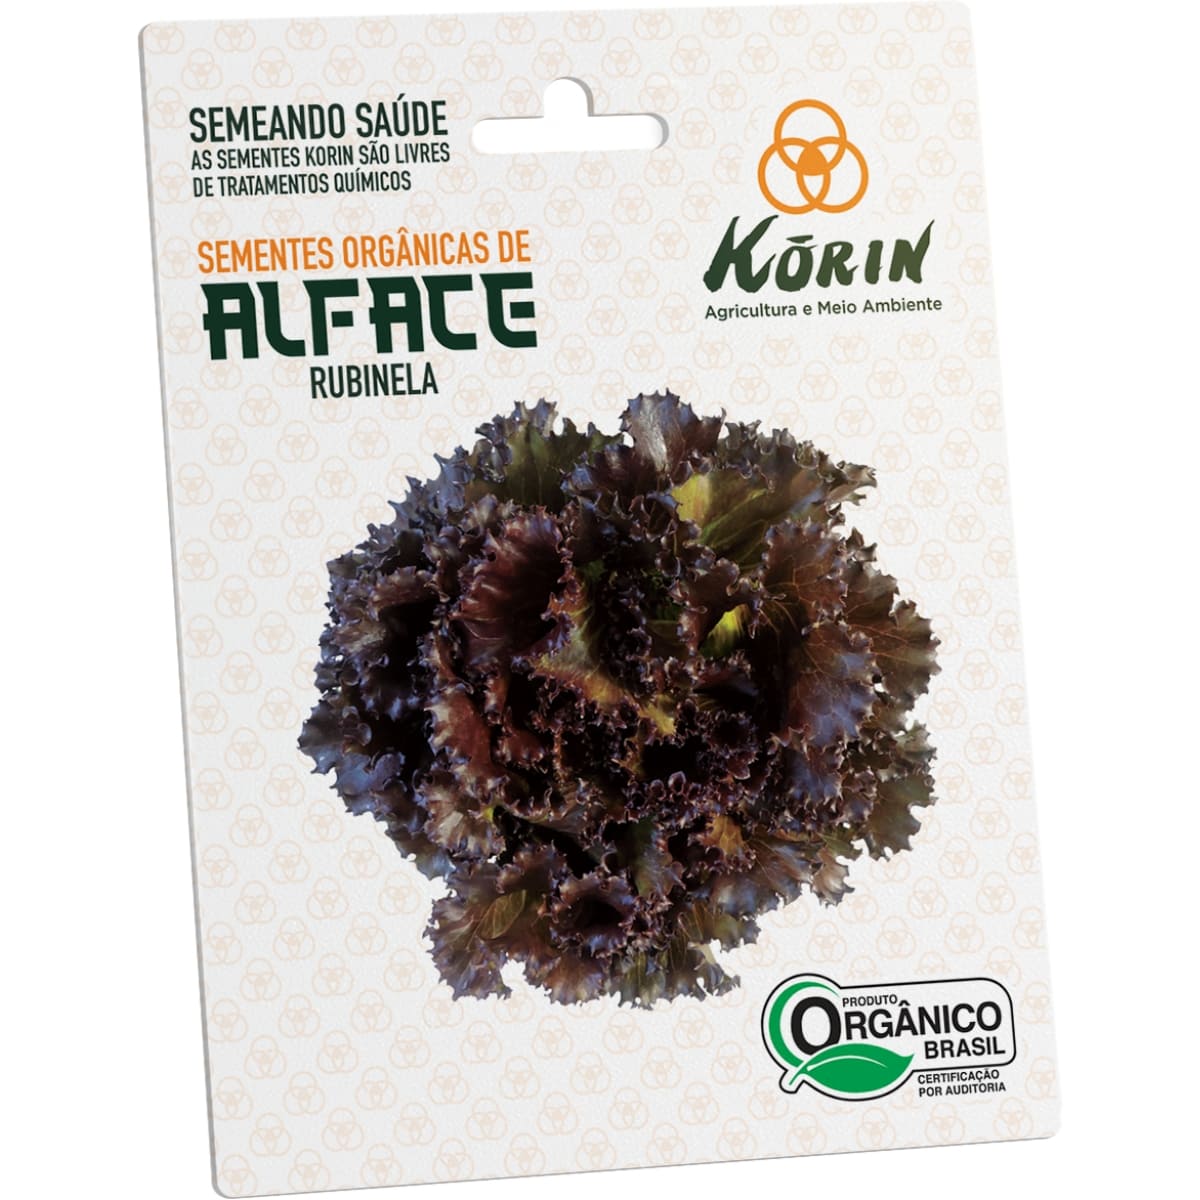 Sementes Orgânicas de Alface Rubinela Korin 3g - Foto 0